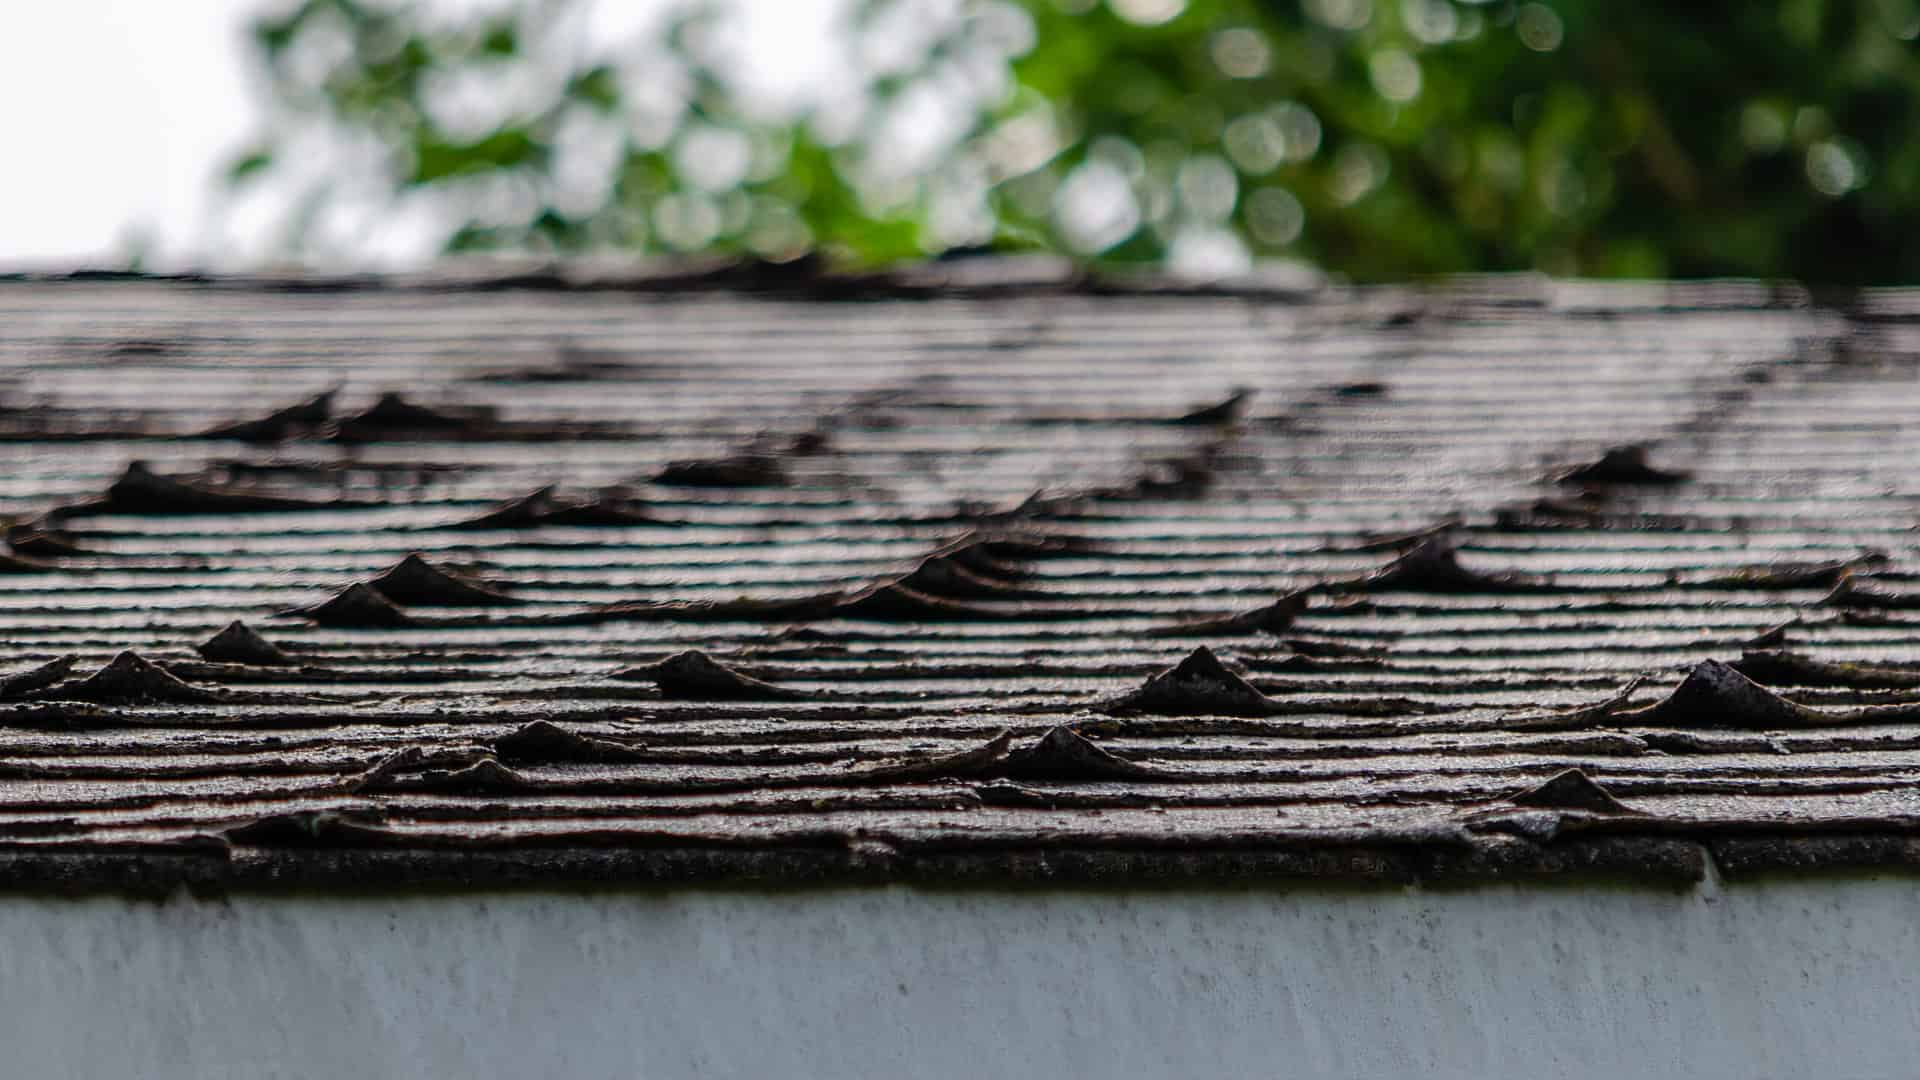 Lifting shingles on omaha roof, photo from omaha roofing company